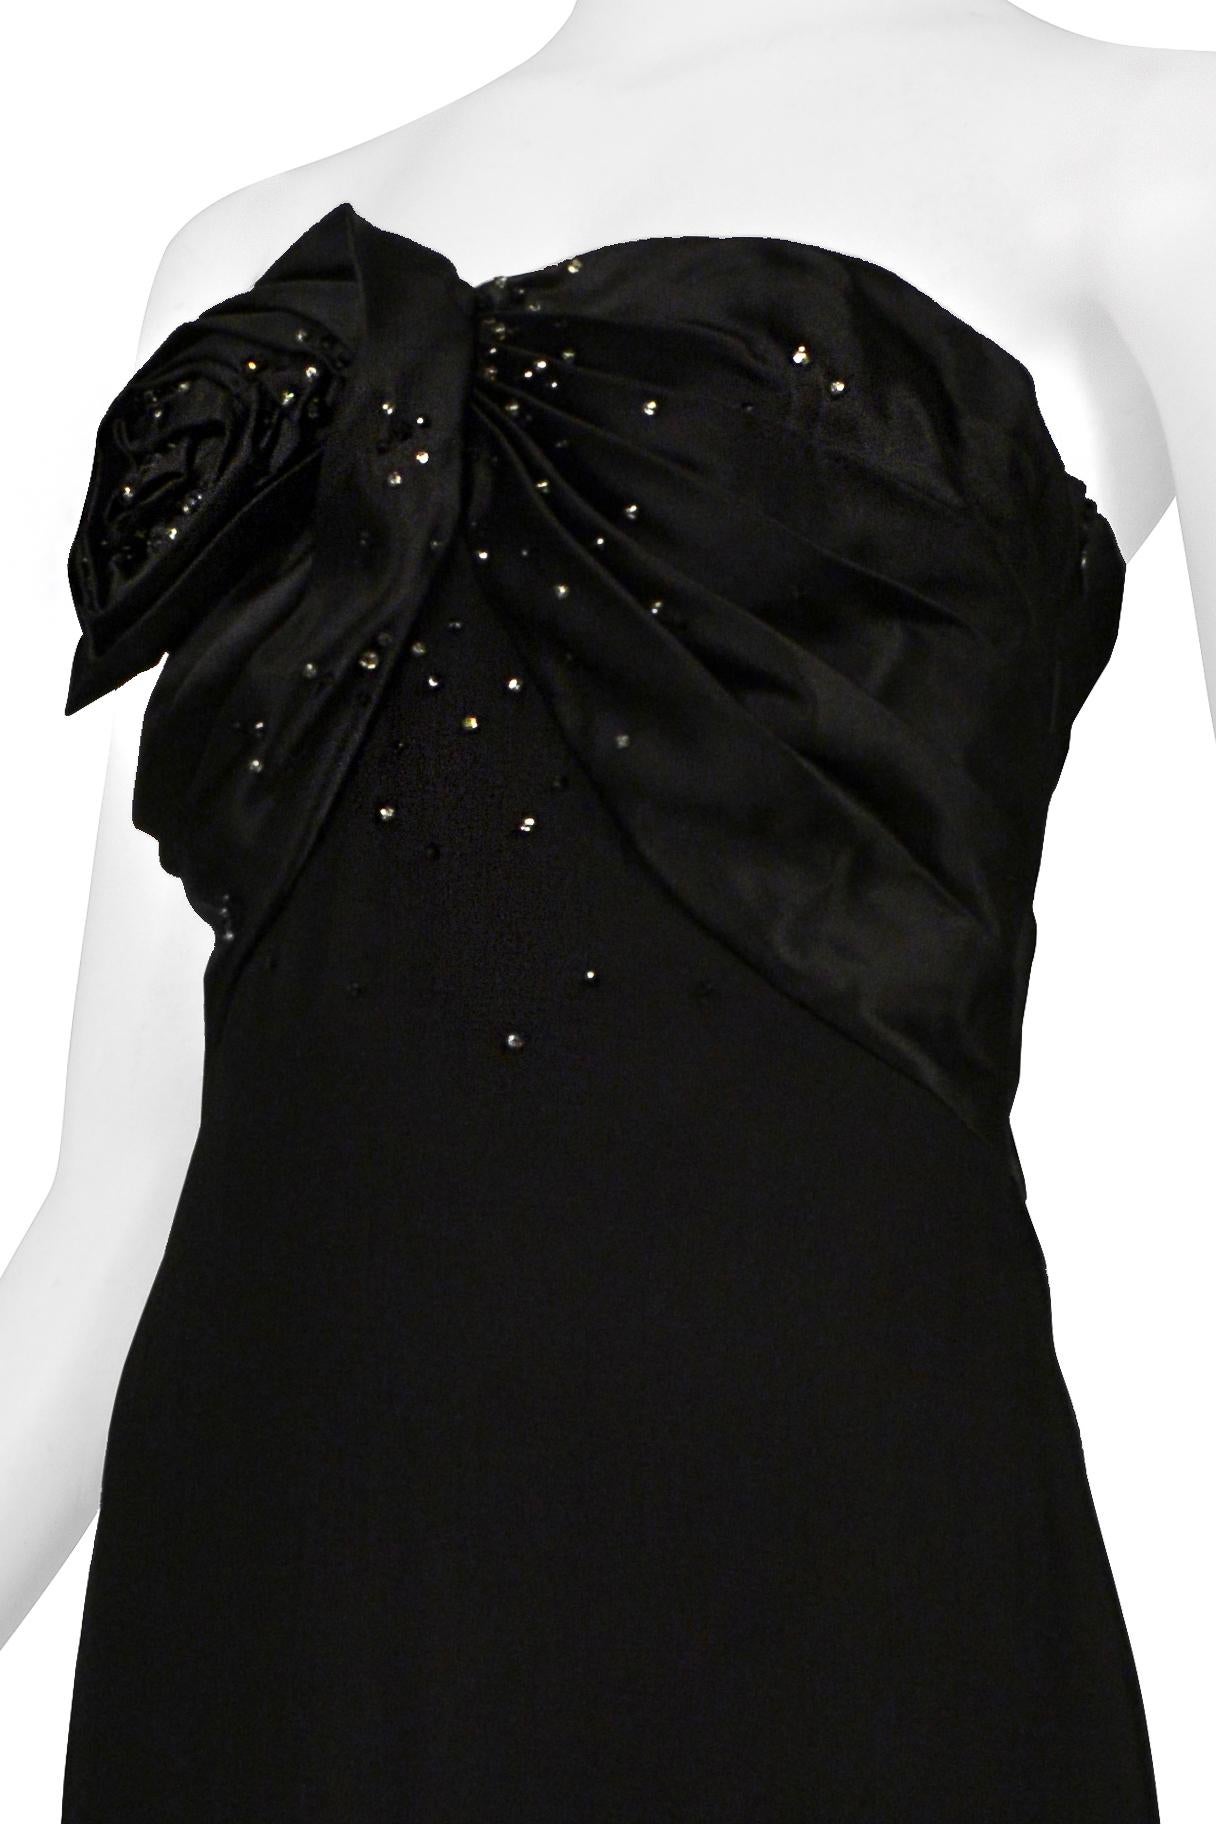 Christian Dior By John Galliano Black Gown W/ Rosettes & Rhinestones 2008 Resort For Sale 2